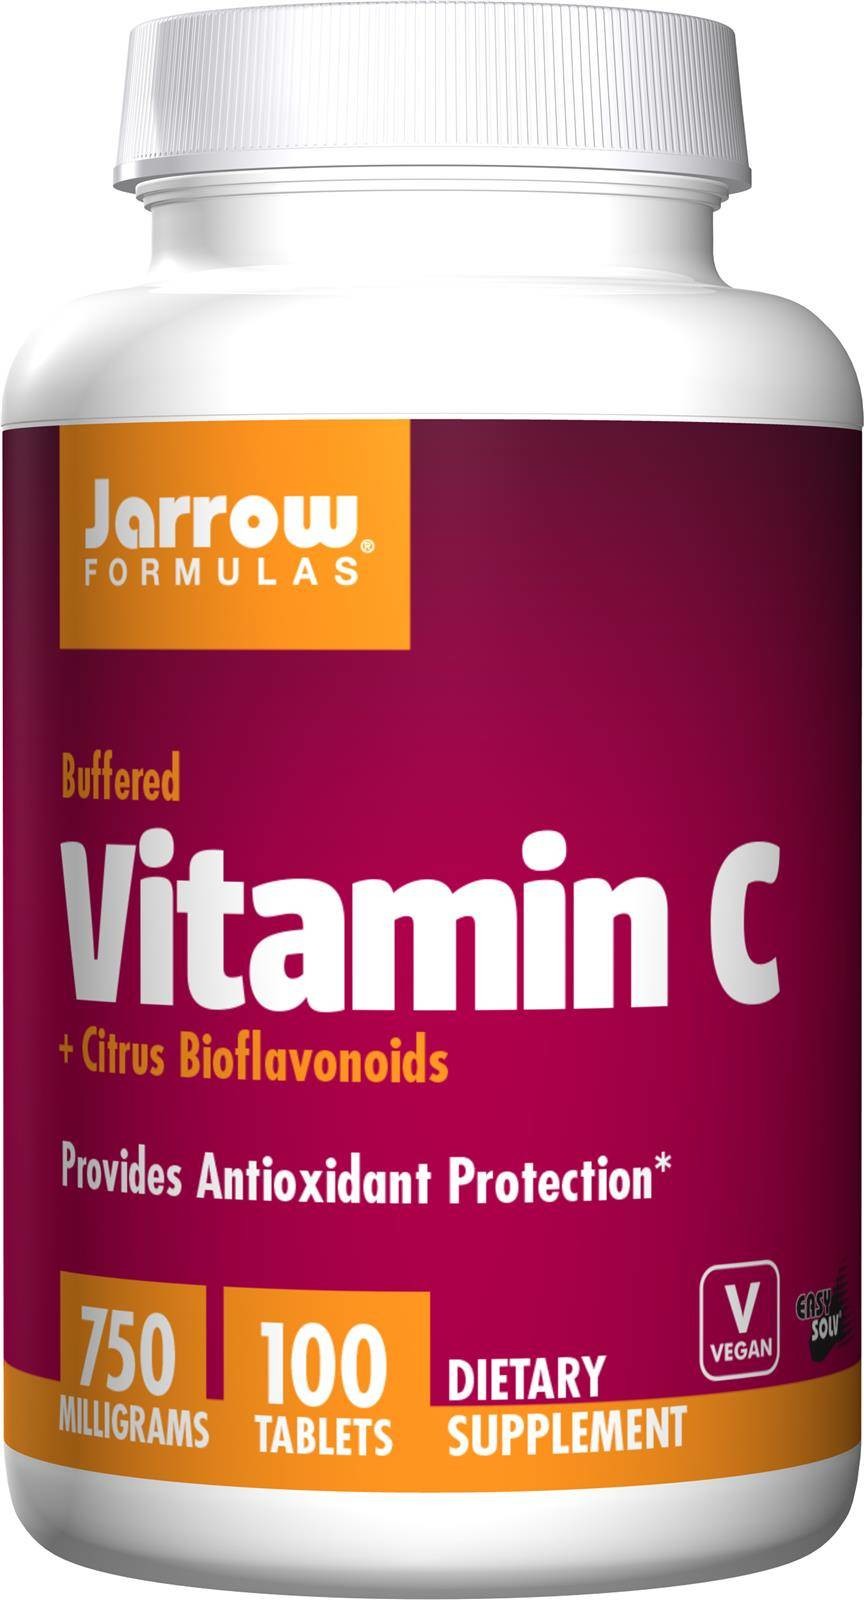 Jarrow Formulas Buforowana Witamina C + Citrus Bioflavonoids (100 tabl.)